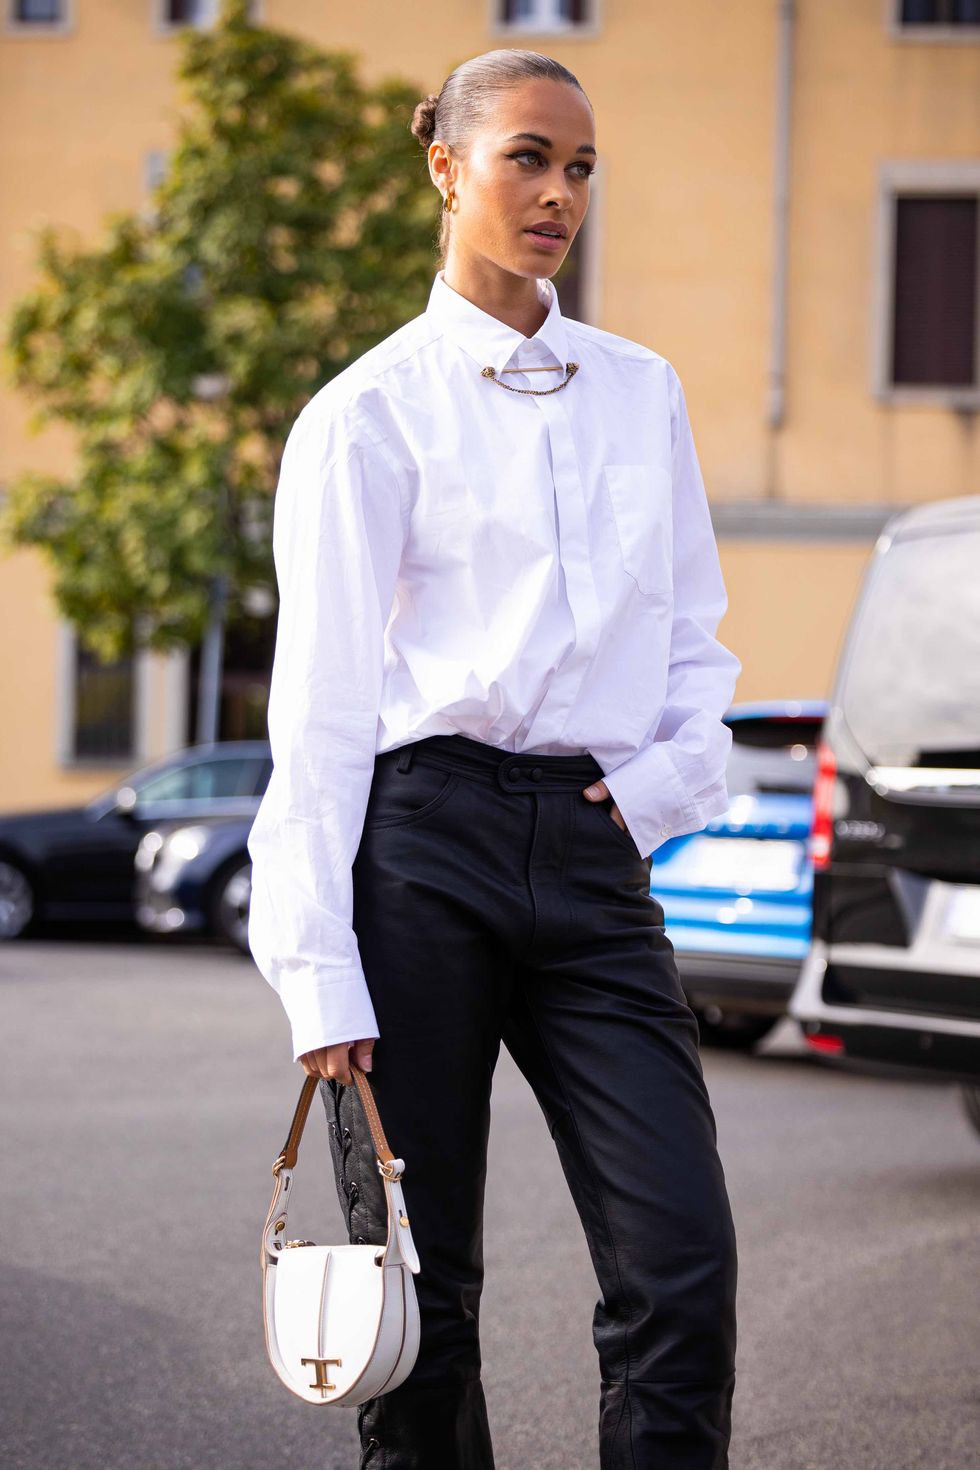 Summer Work Outfit Ideas: Black Pants, an Interesting White Shirt